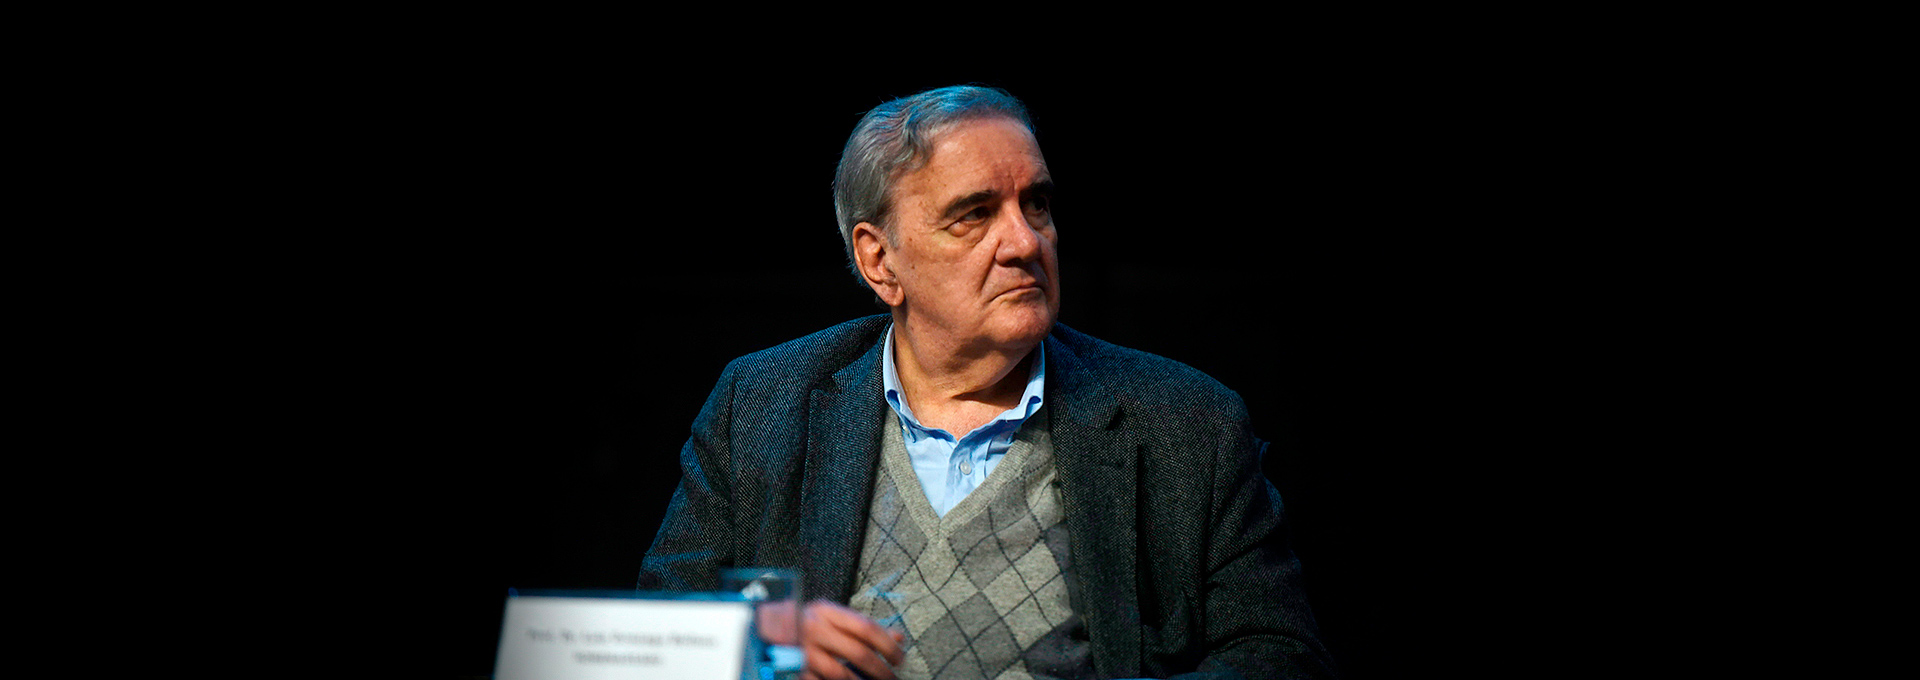 Economista Luiz Gonzaga Belluzzo. Foto: Antonio Scarpinetti